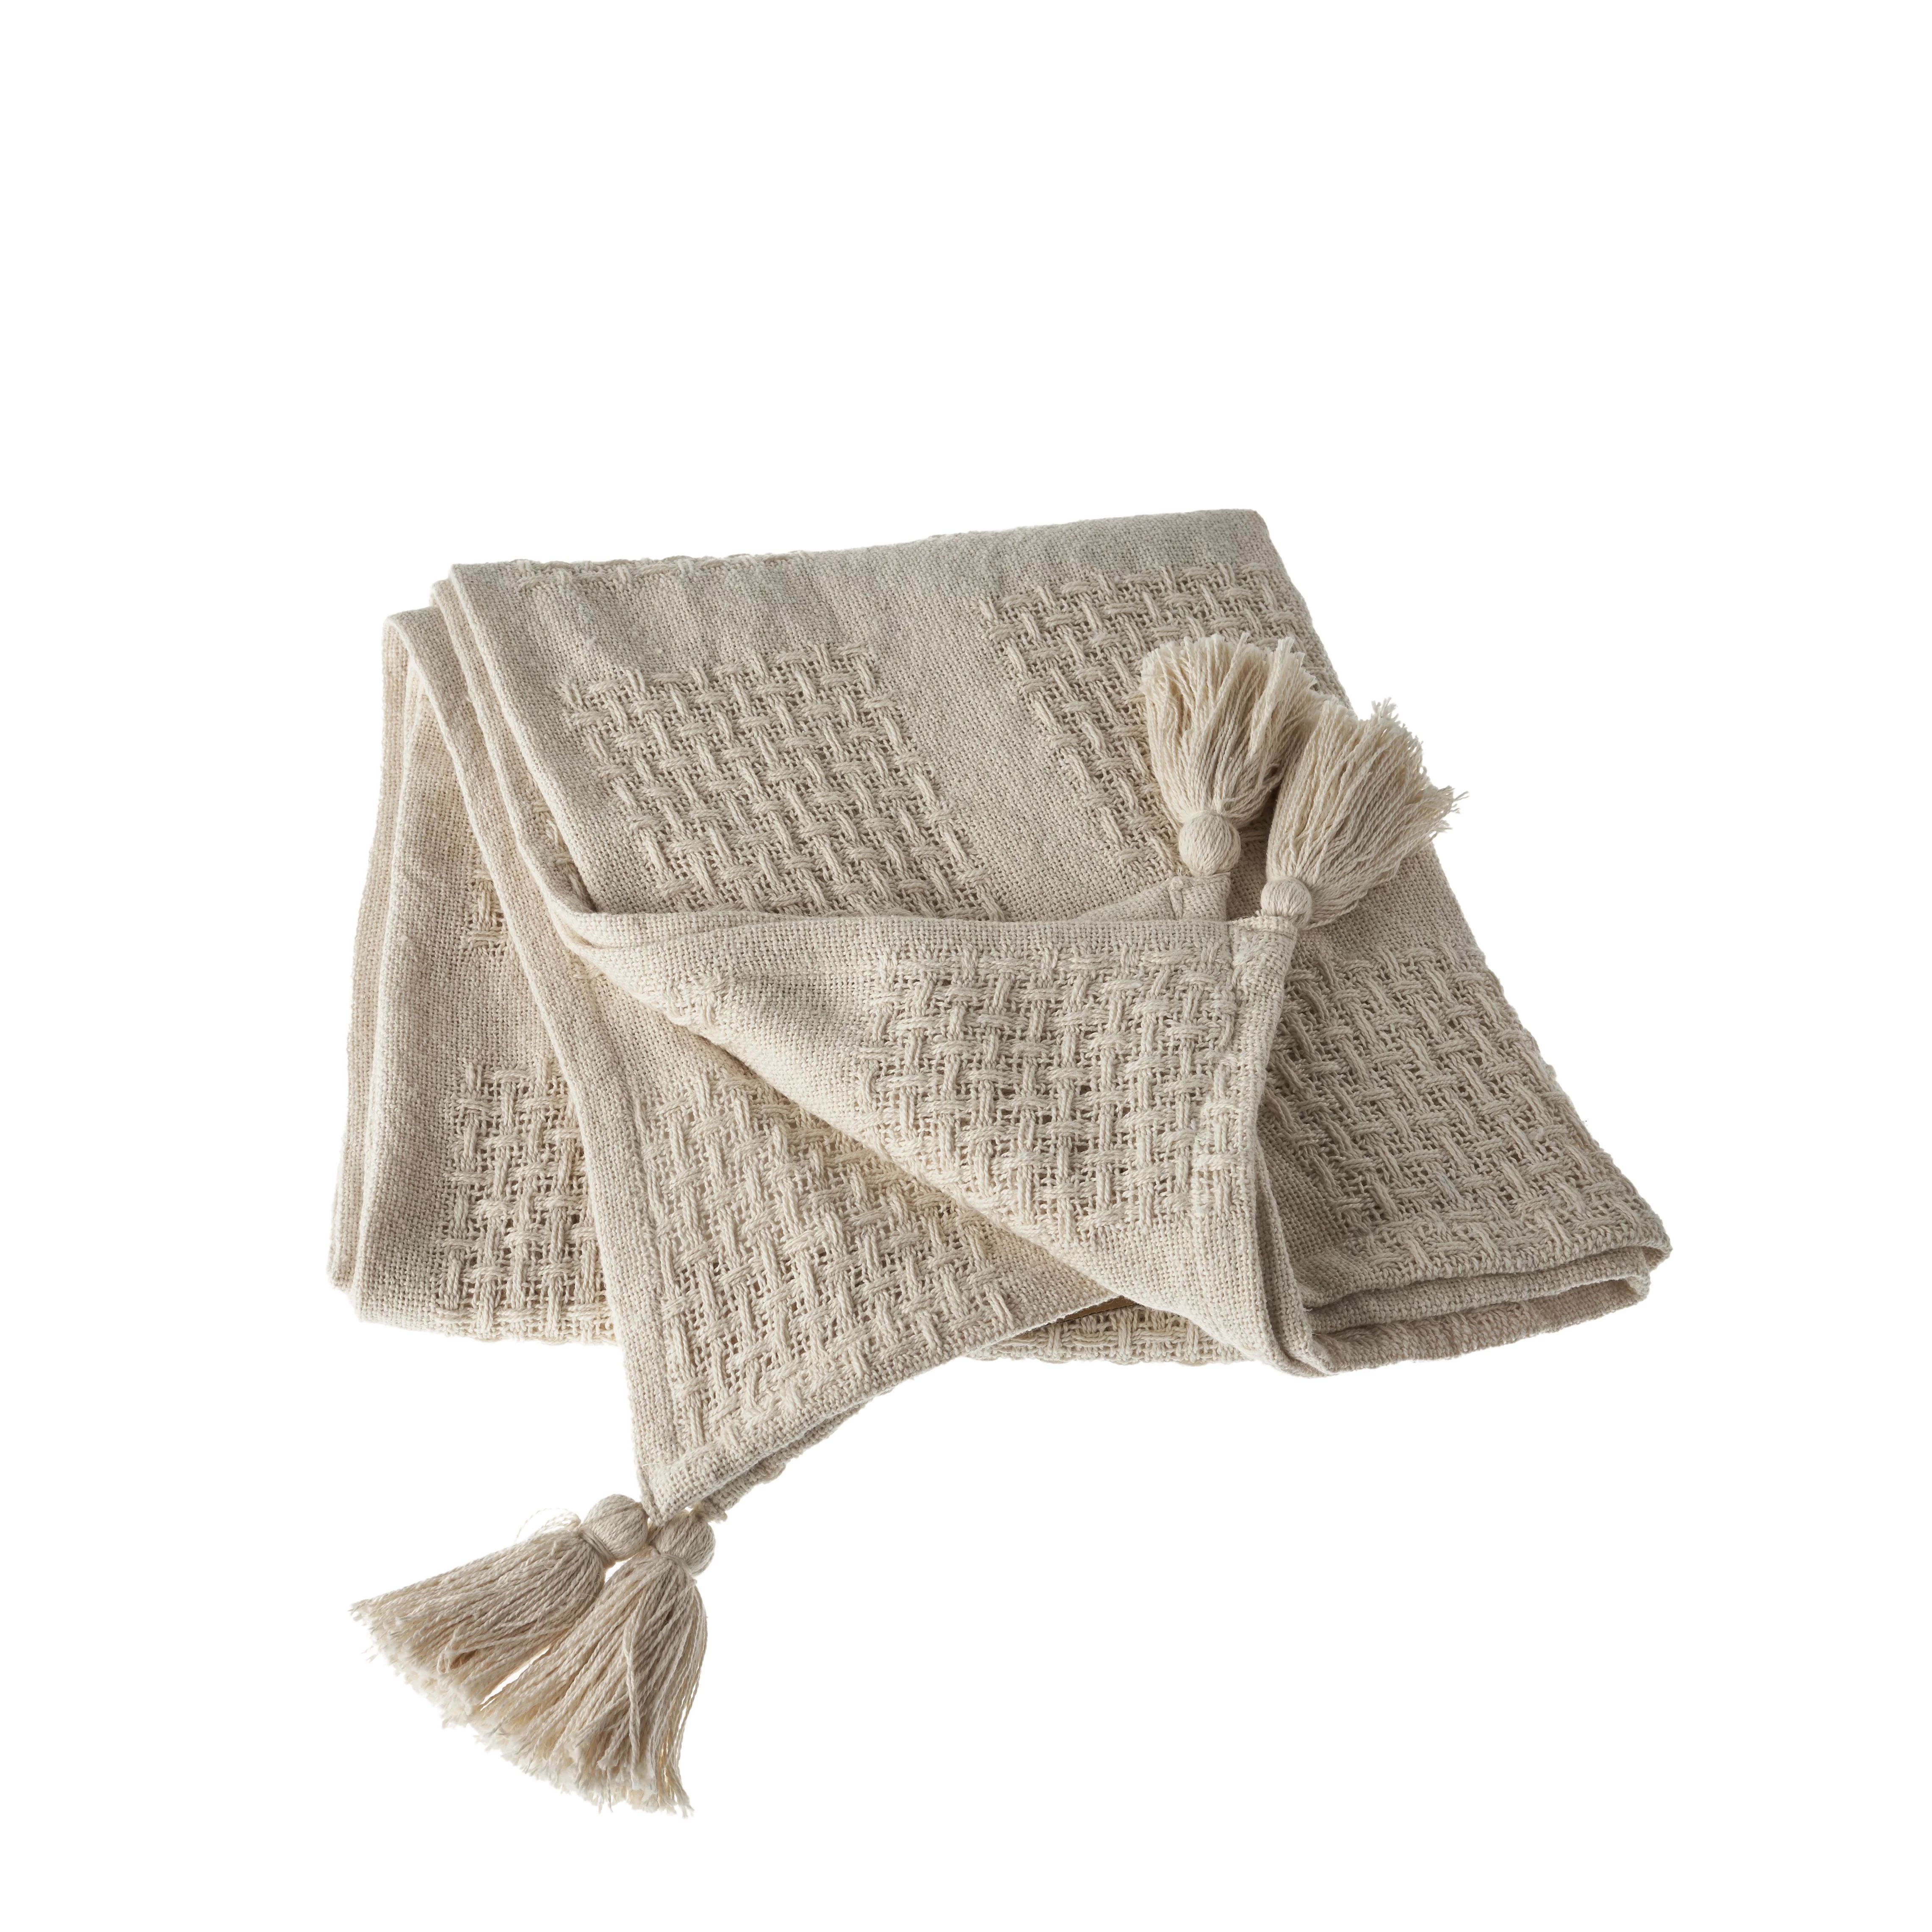 Woven Paths Gingham Beige Patchwork Cotton Throw Blanket with Tassels, 60" x 50" | Walmart (US)